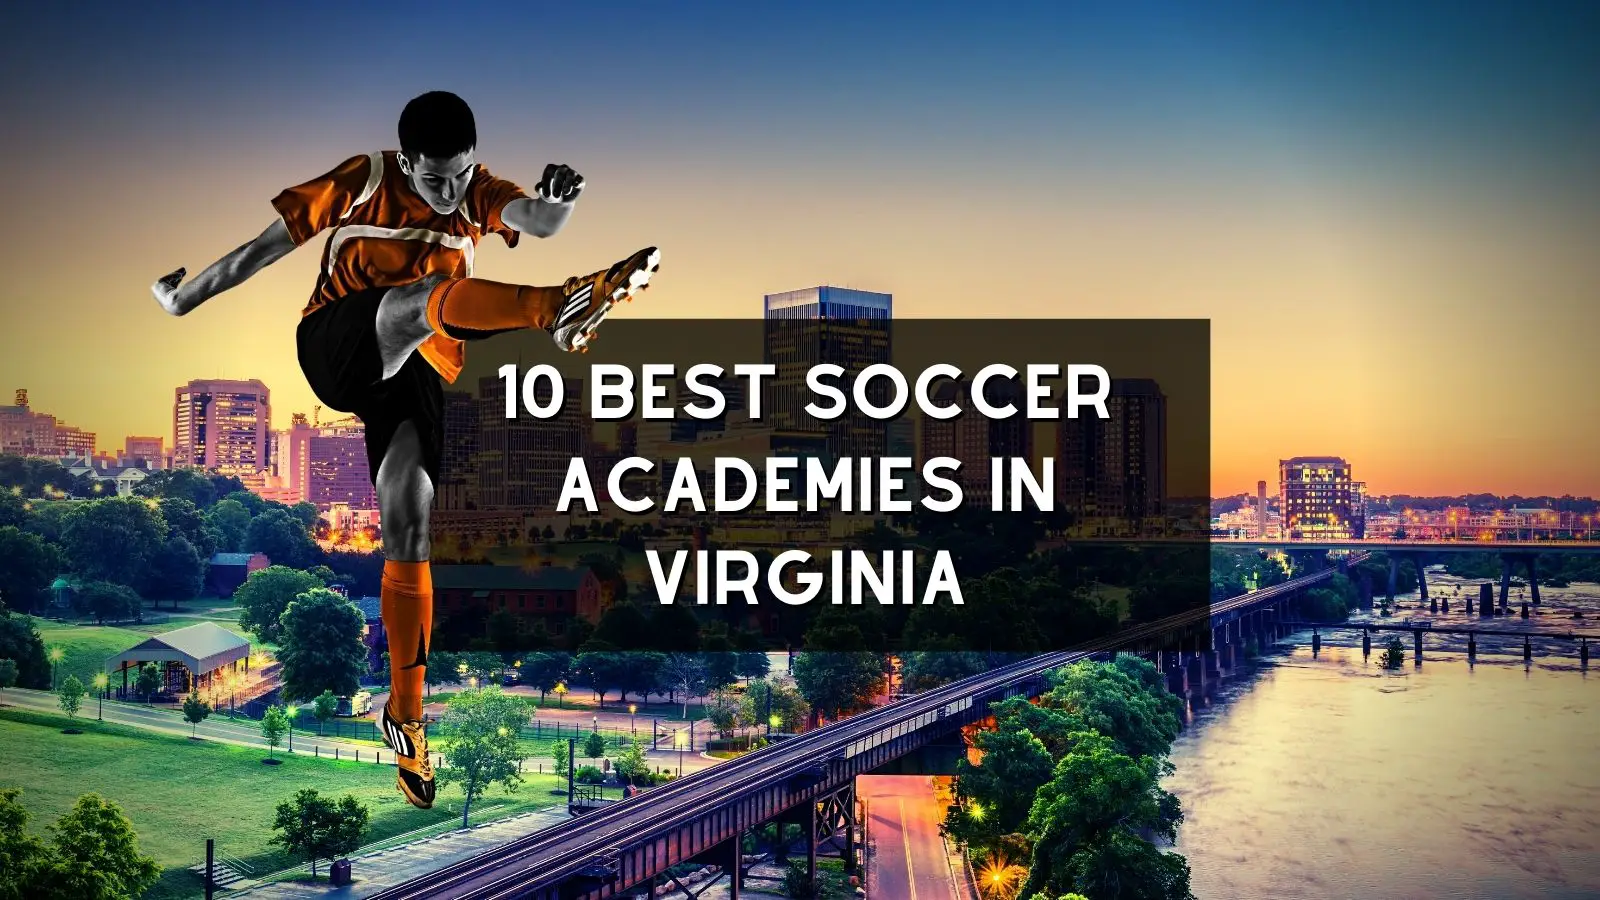 The 10 Best Soccer Academies In Virginia – (2022) Guide